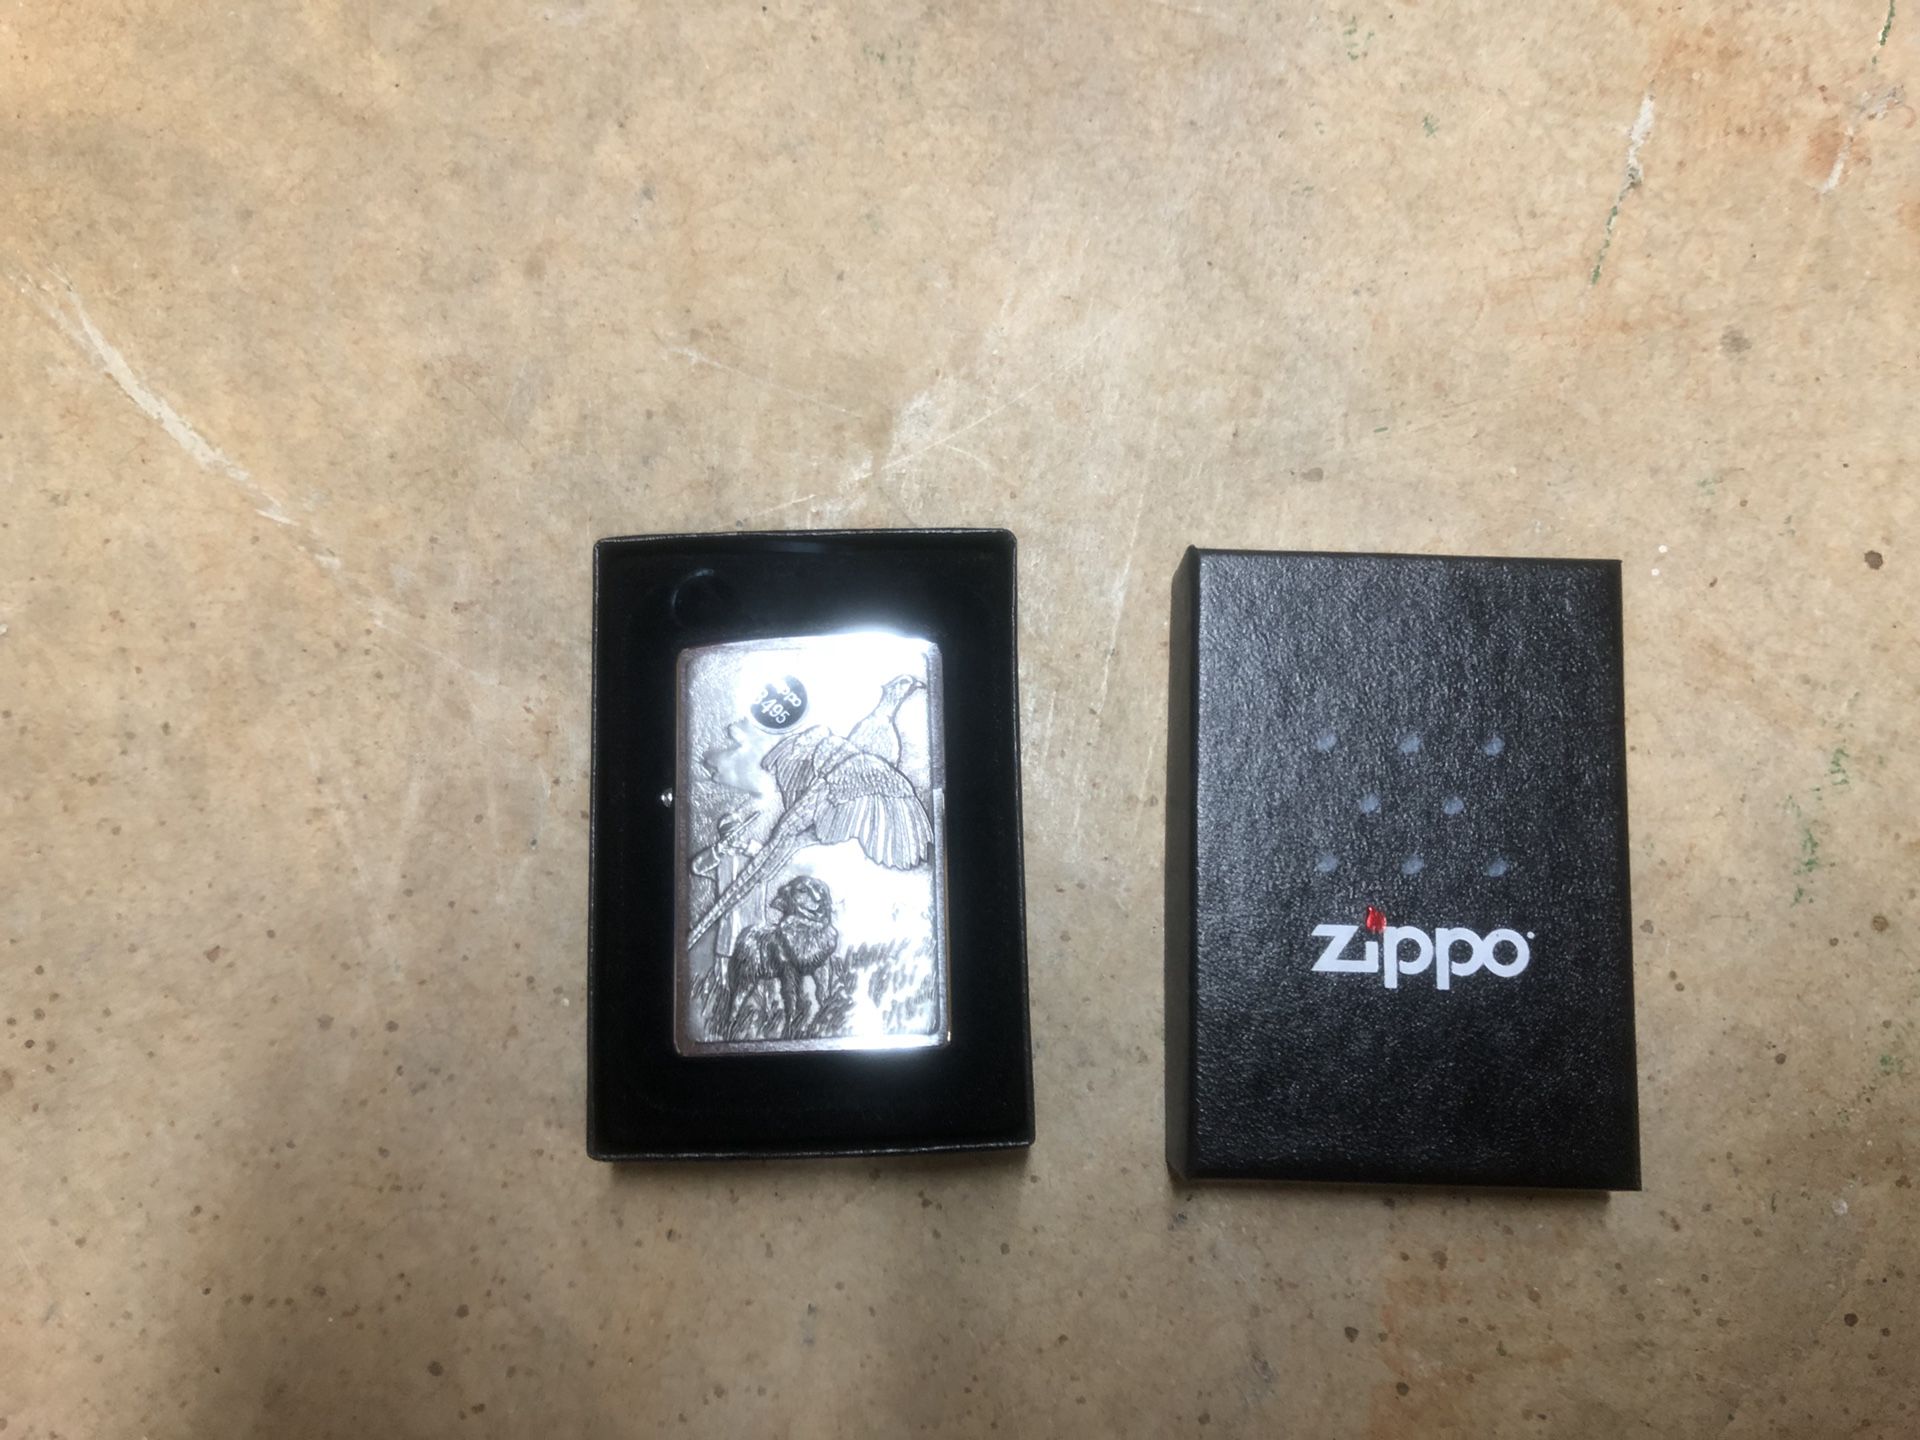 Zippo Flying Pheasant - Open box - Not used